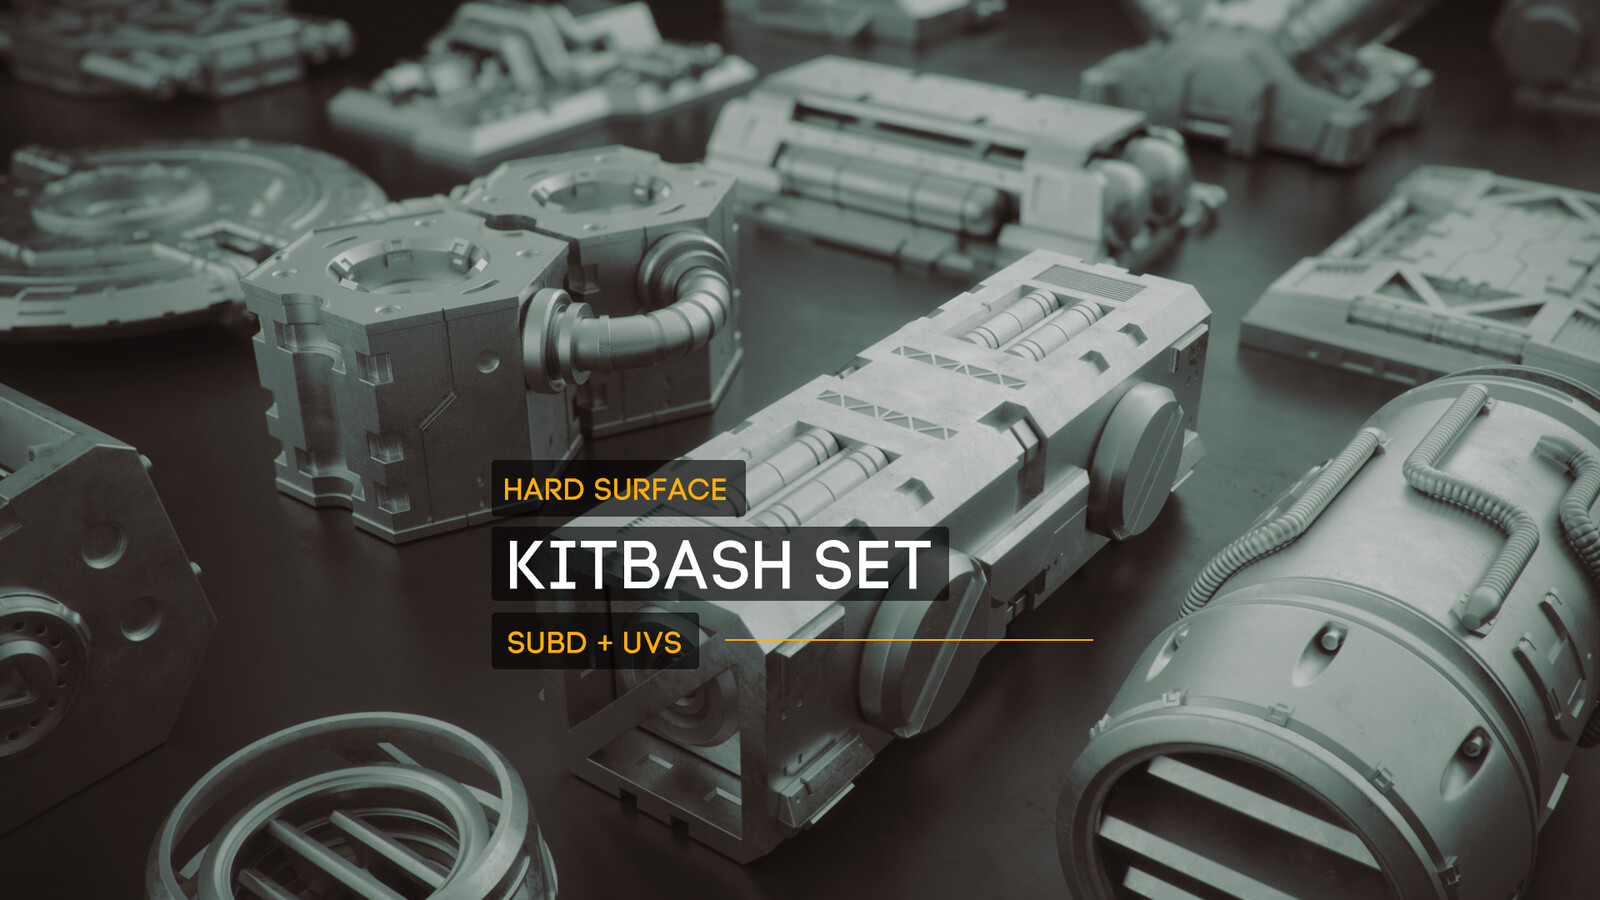 Hard Surface Kitbash Set 001 / SubD + UVs